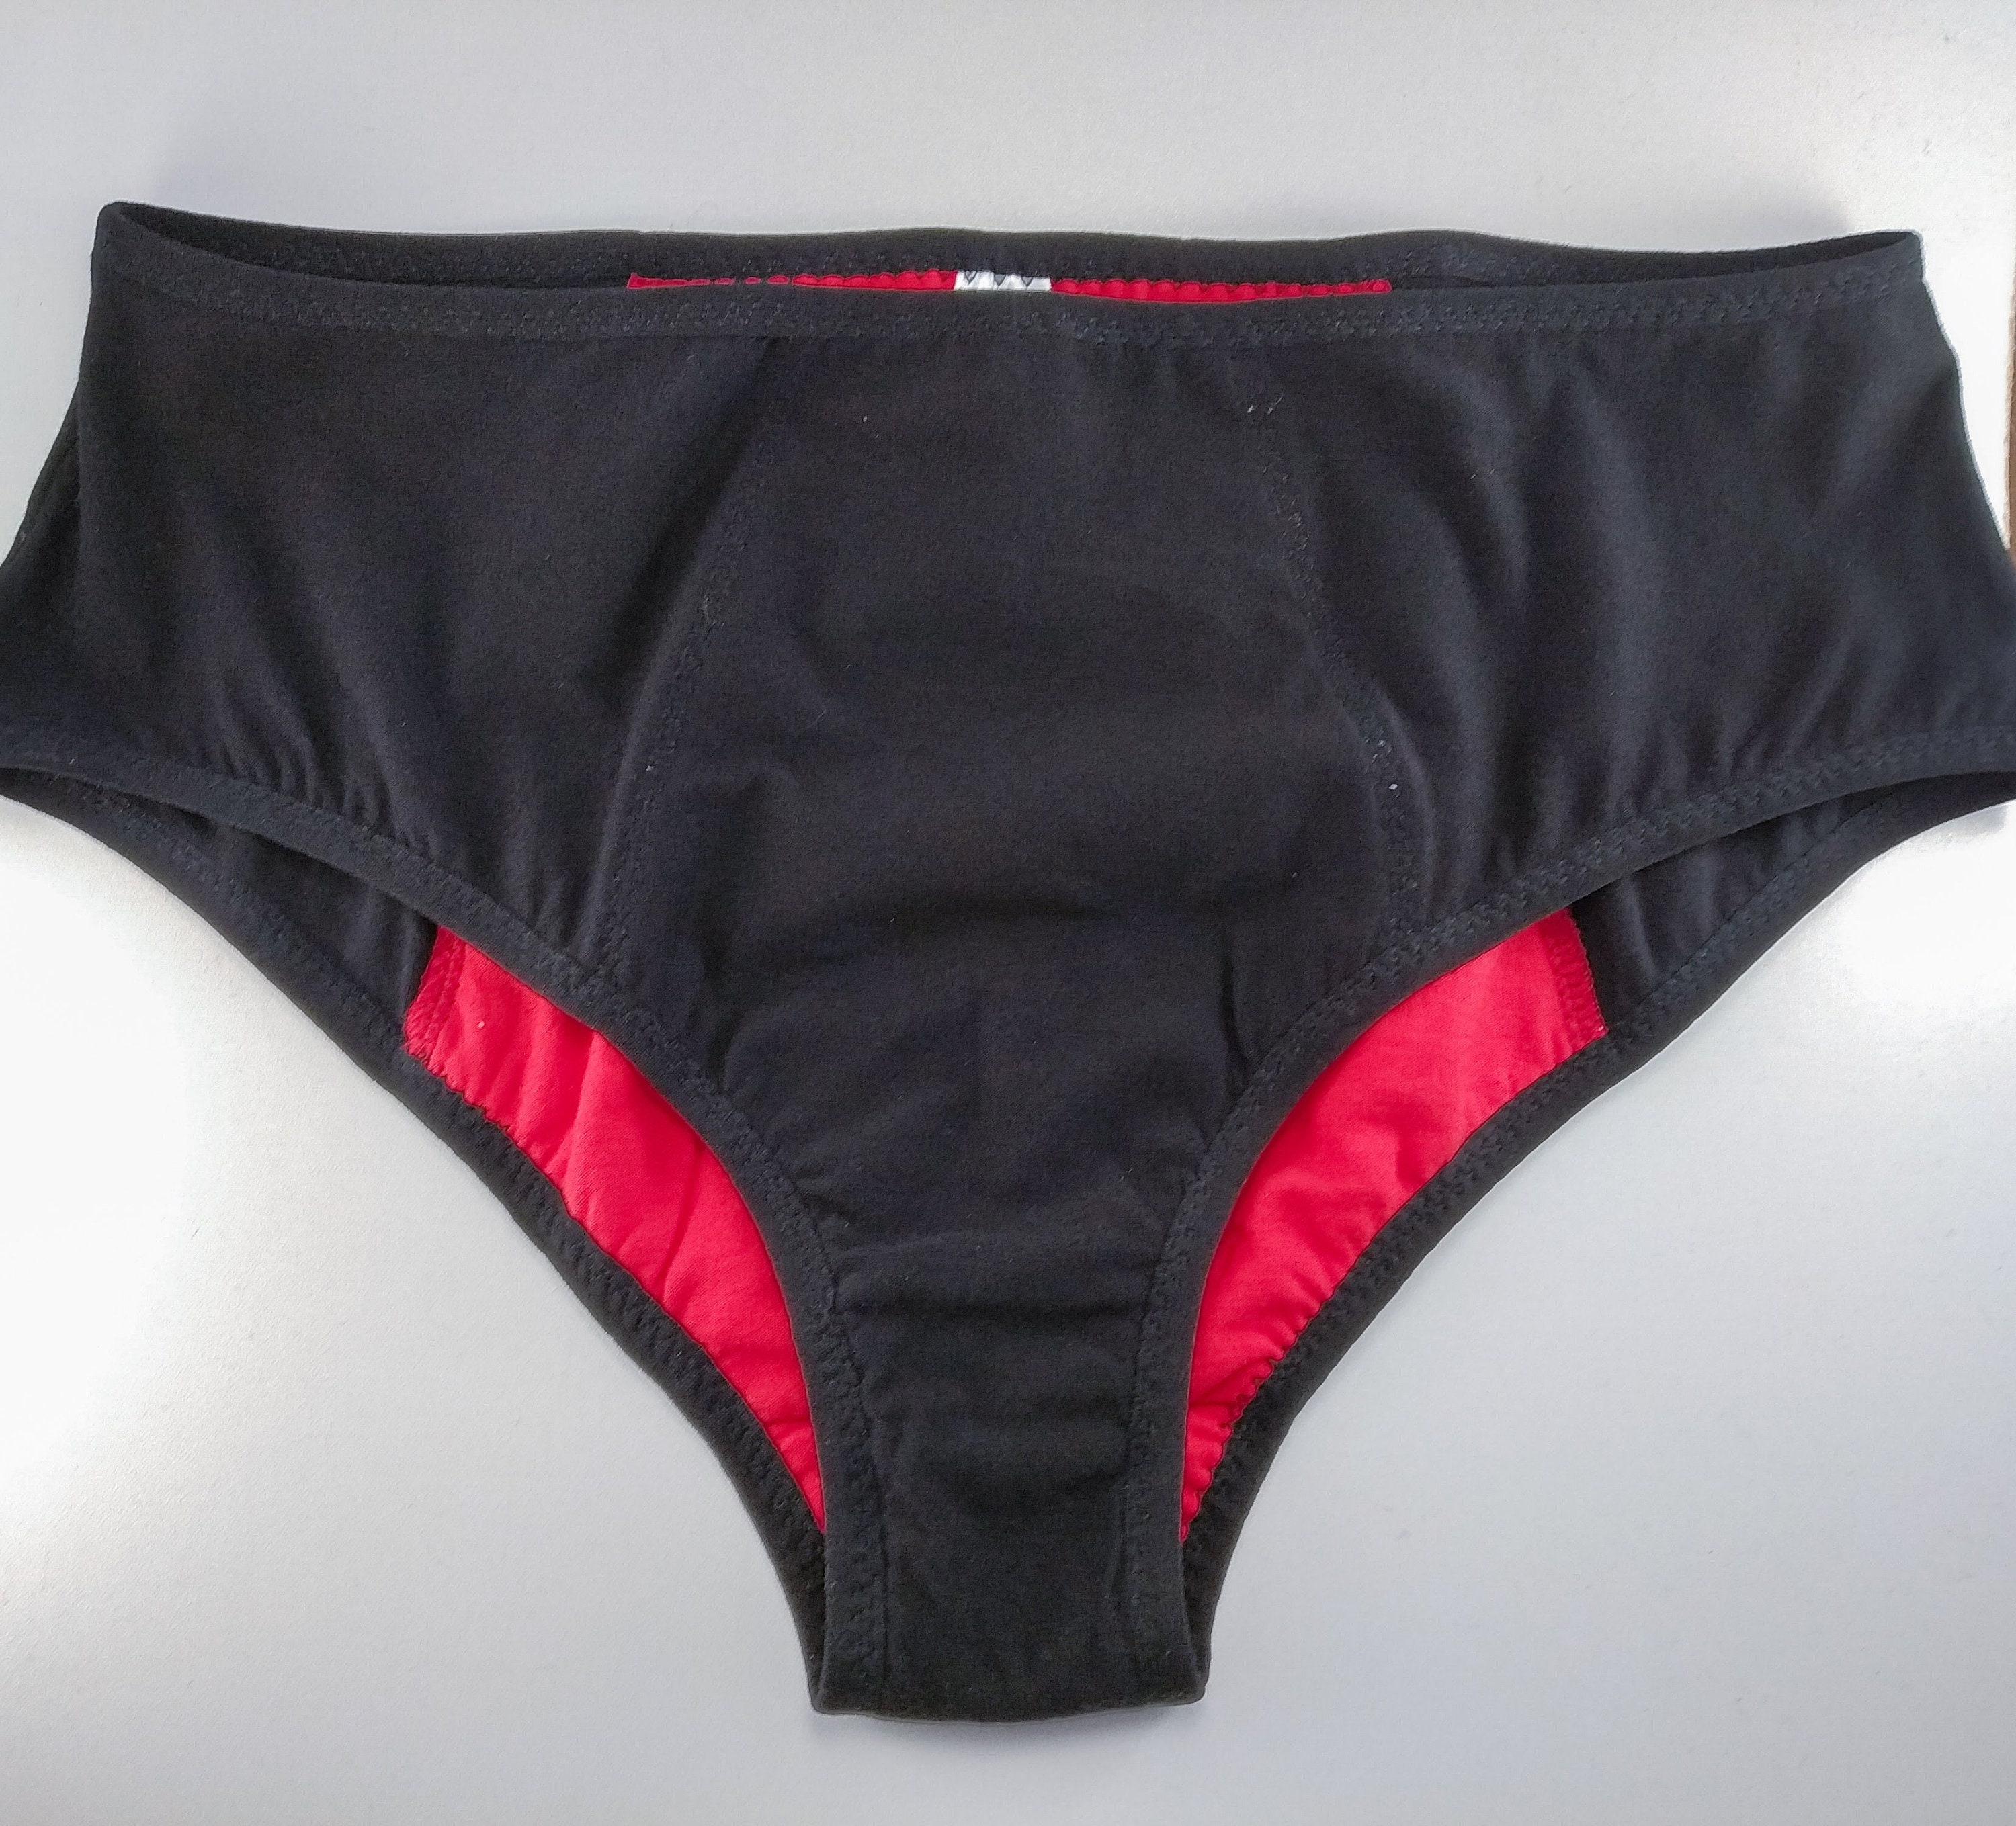 Buy Thinx Boyshort Period Underwear